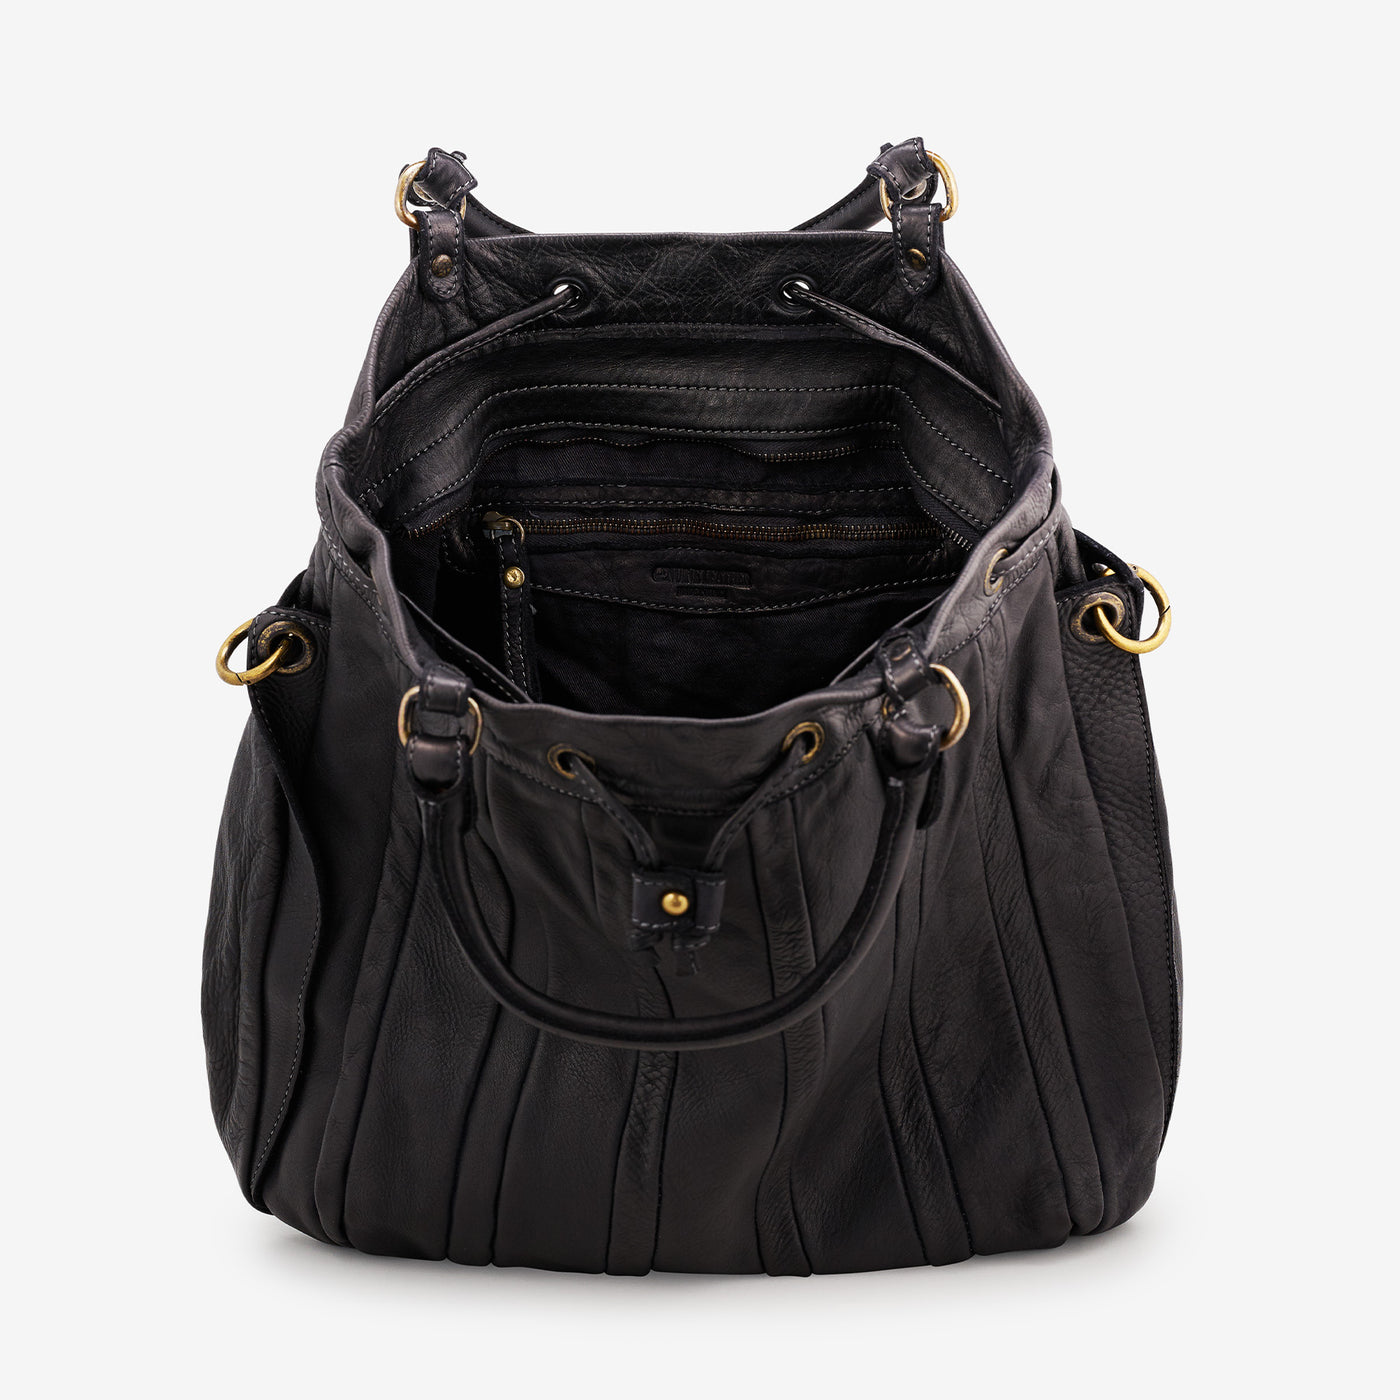 VIAVERDI Black Soft Leather Bucket Bag Made in Italy 